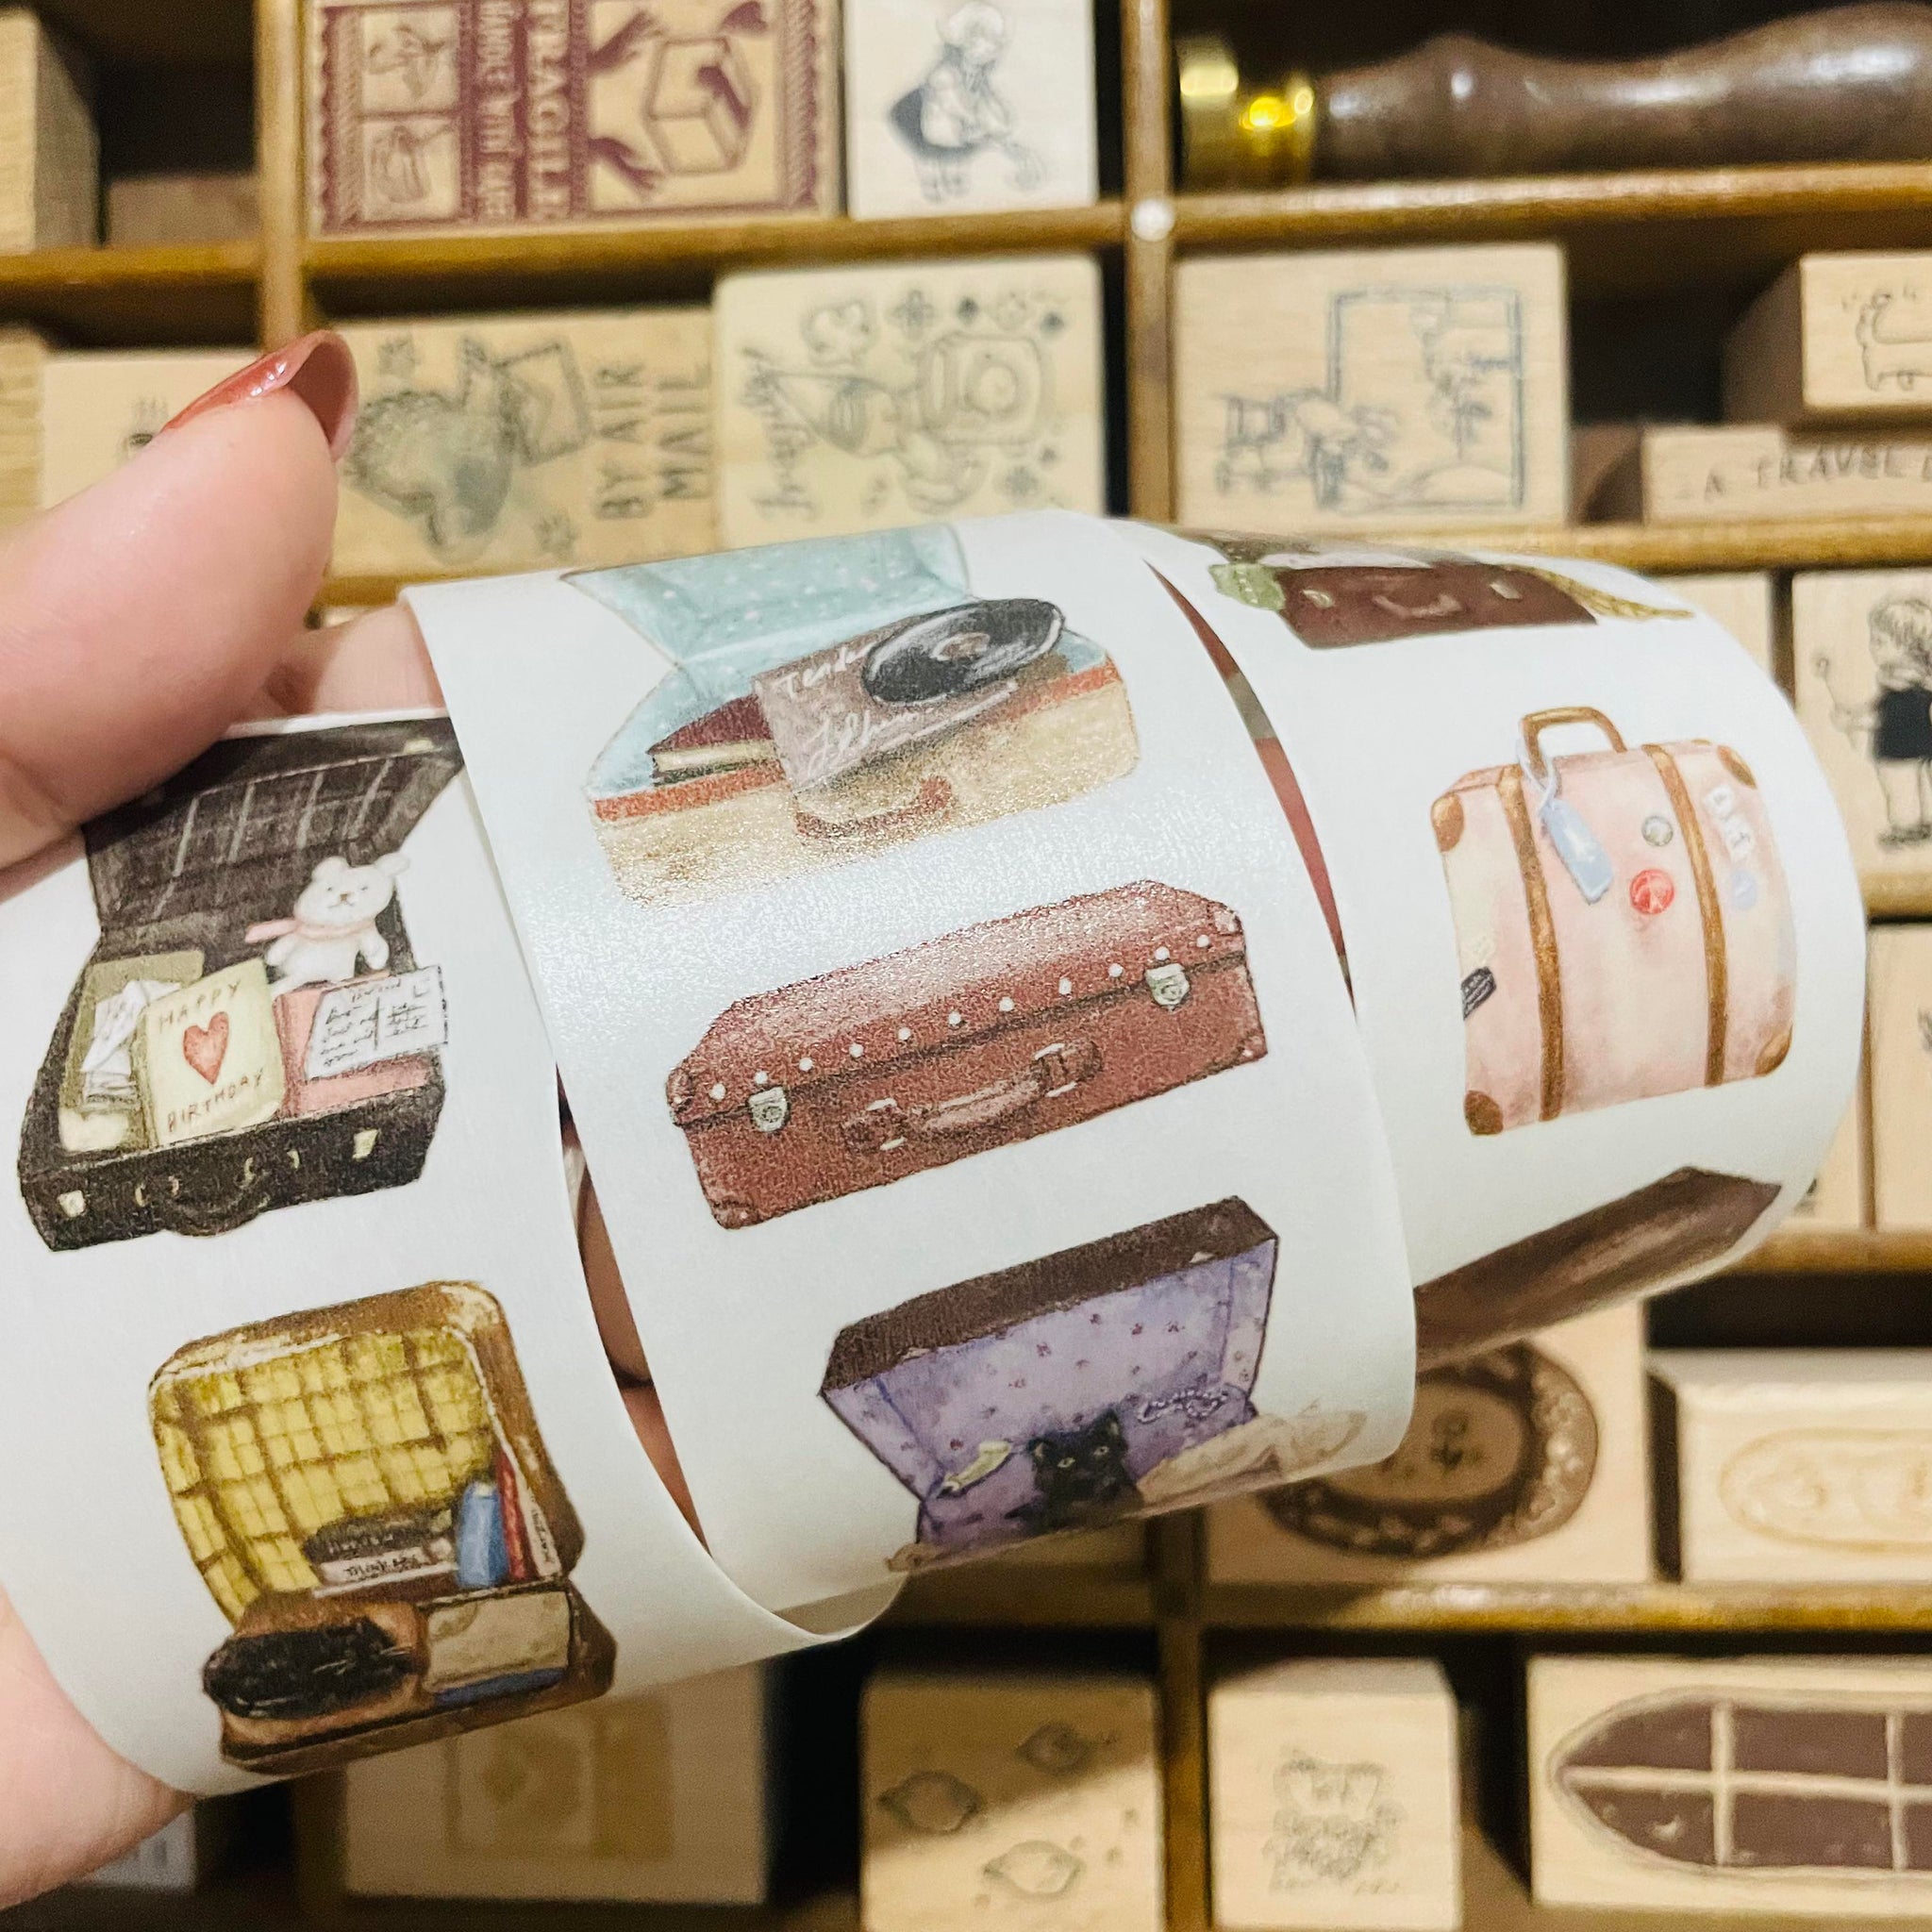 Yeoncharm Leather Suitcase Washi Tape Roll and Sample – Tokubetsumemori